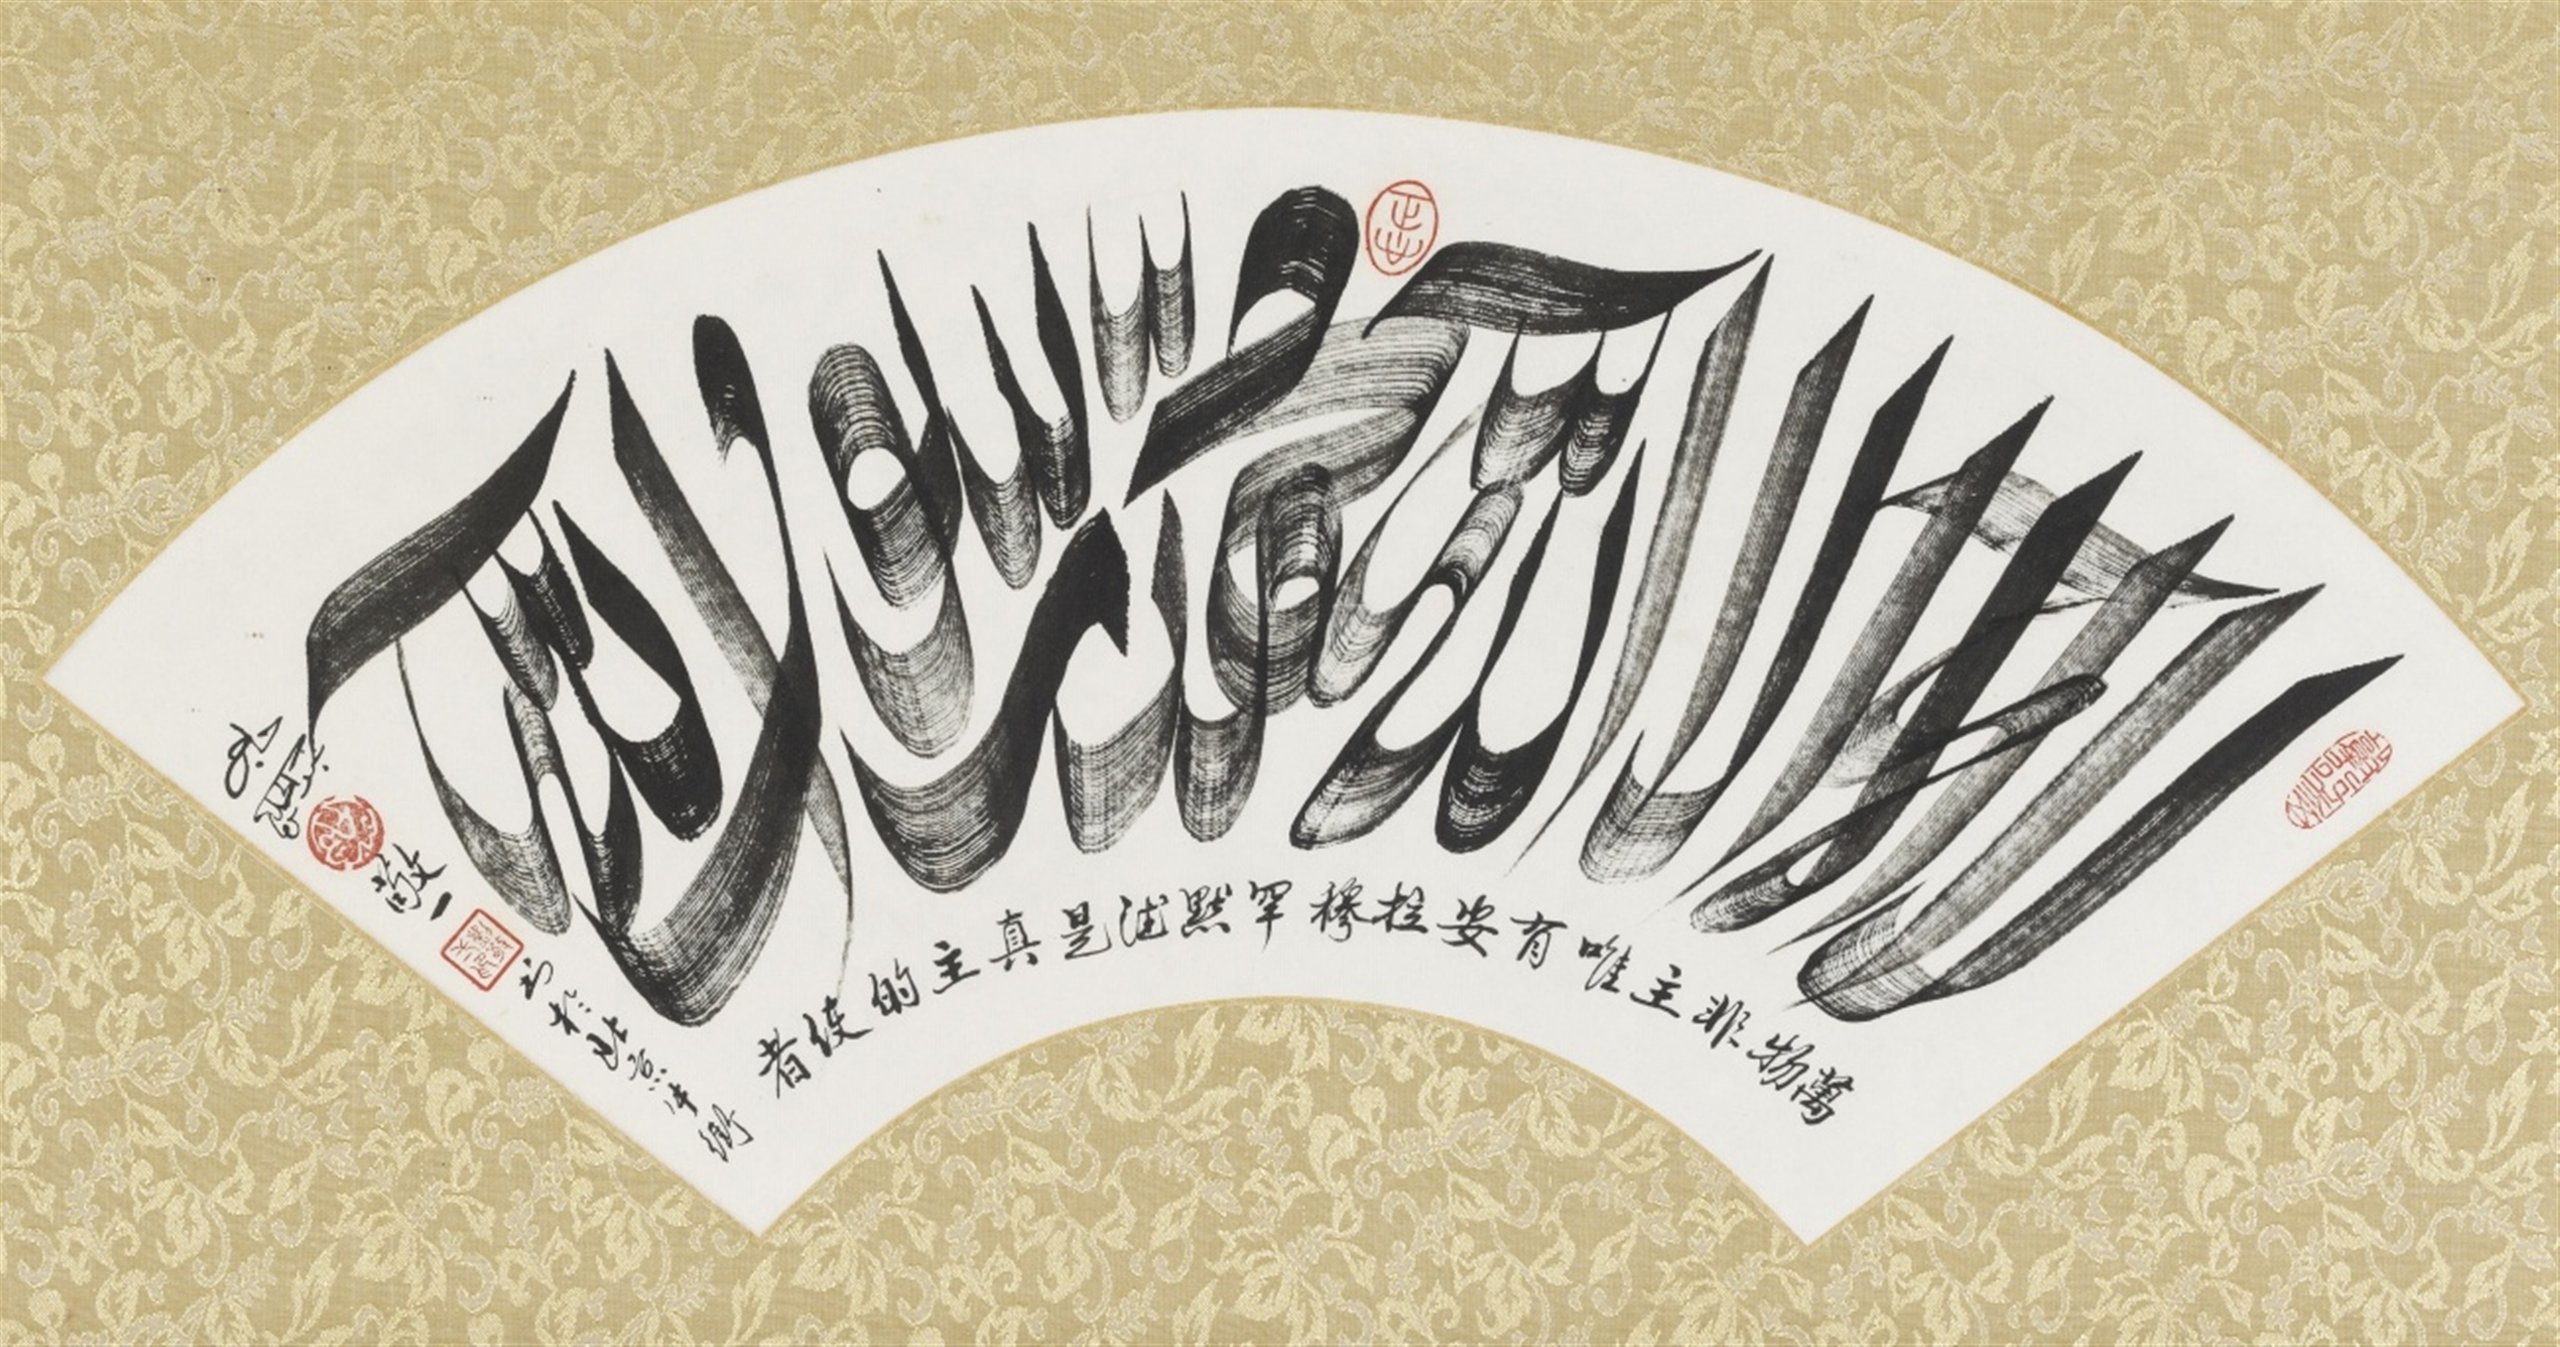 Abdul Hakim Arabic Calligraphy La Illaha Ila Llah Muhammad Rasul Allah There Is No God But Allah Muhammad Is The Messenger Of Allah With Chinese Translation Mutualart